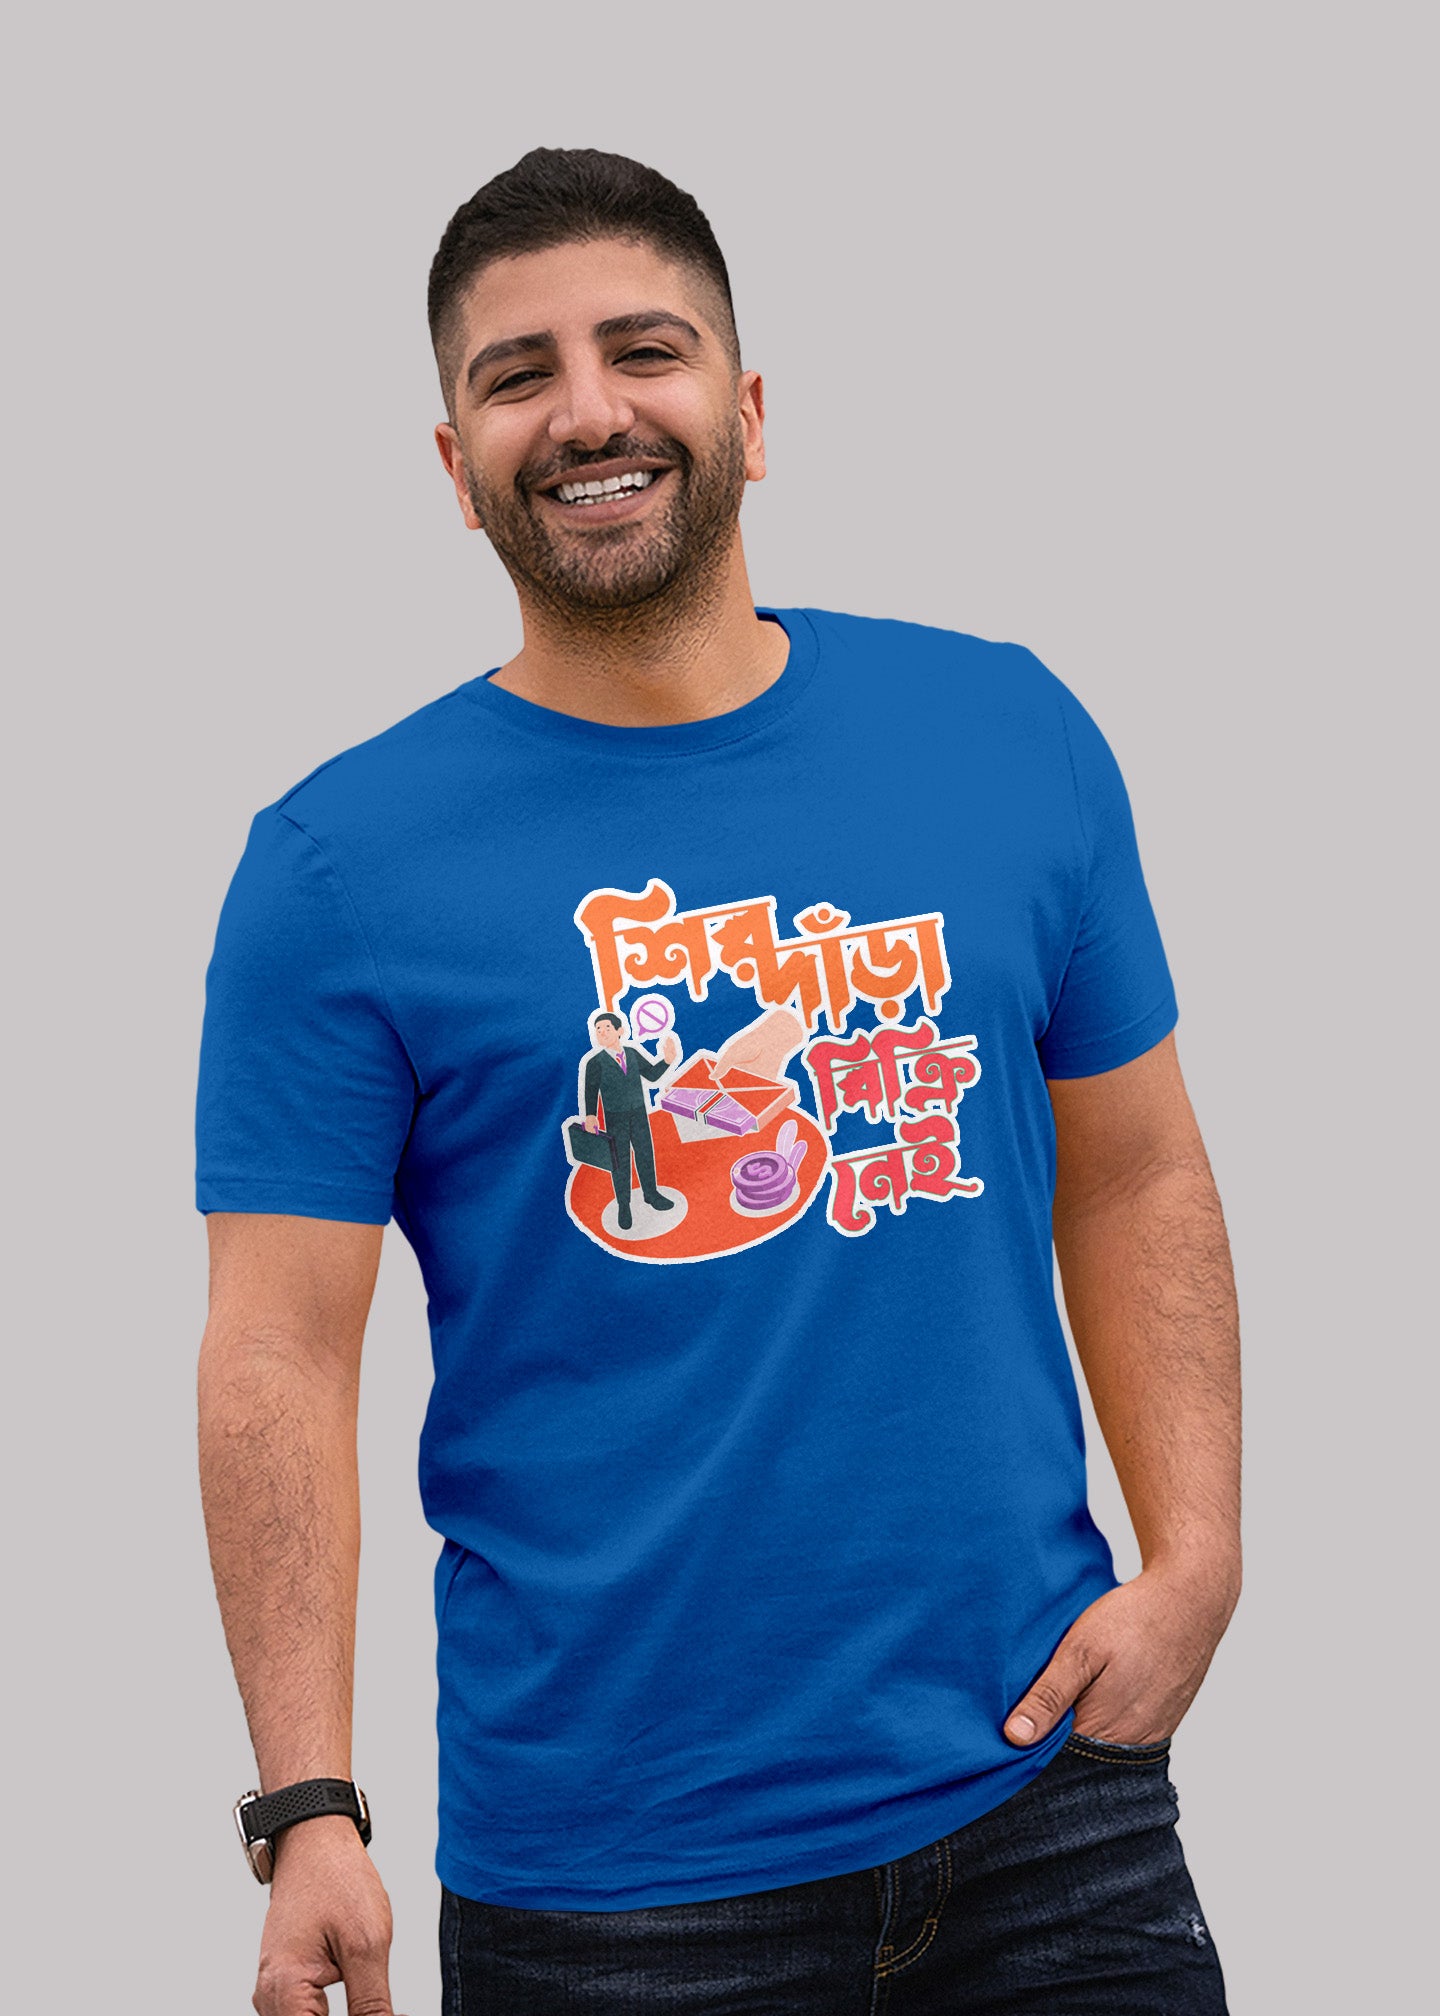 Sirdara bikri nei bengali Printed Half Sleeve Premium Cotton T-shirt For Men